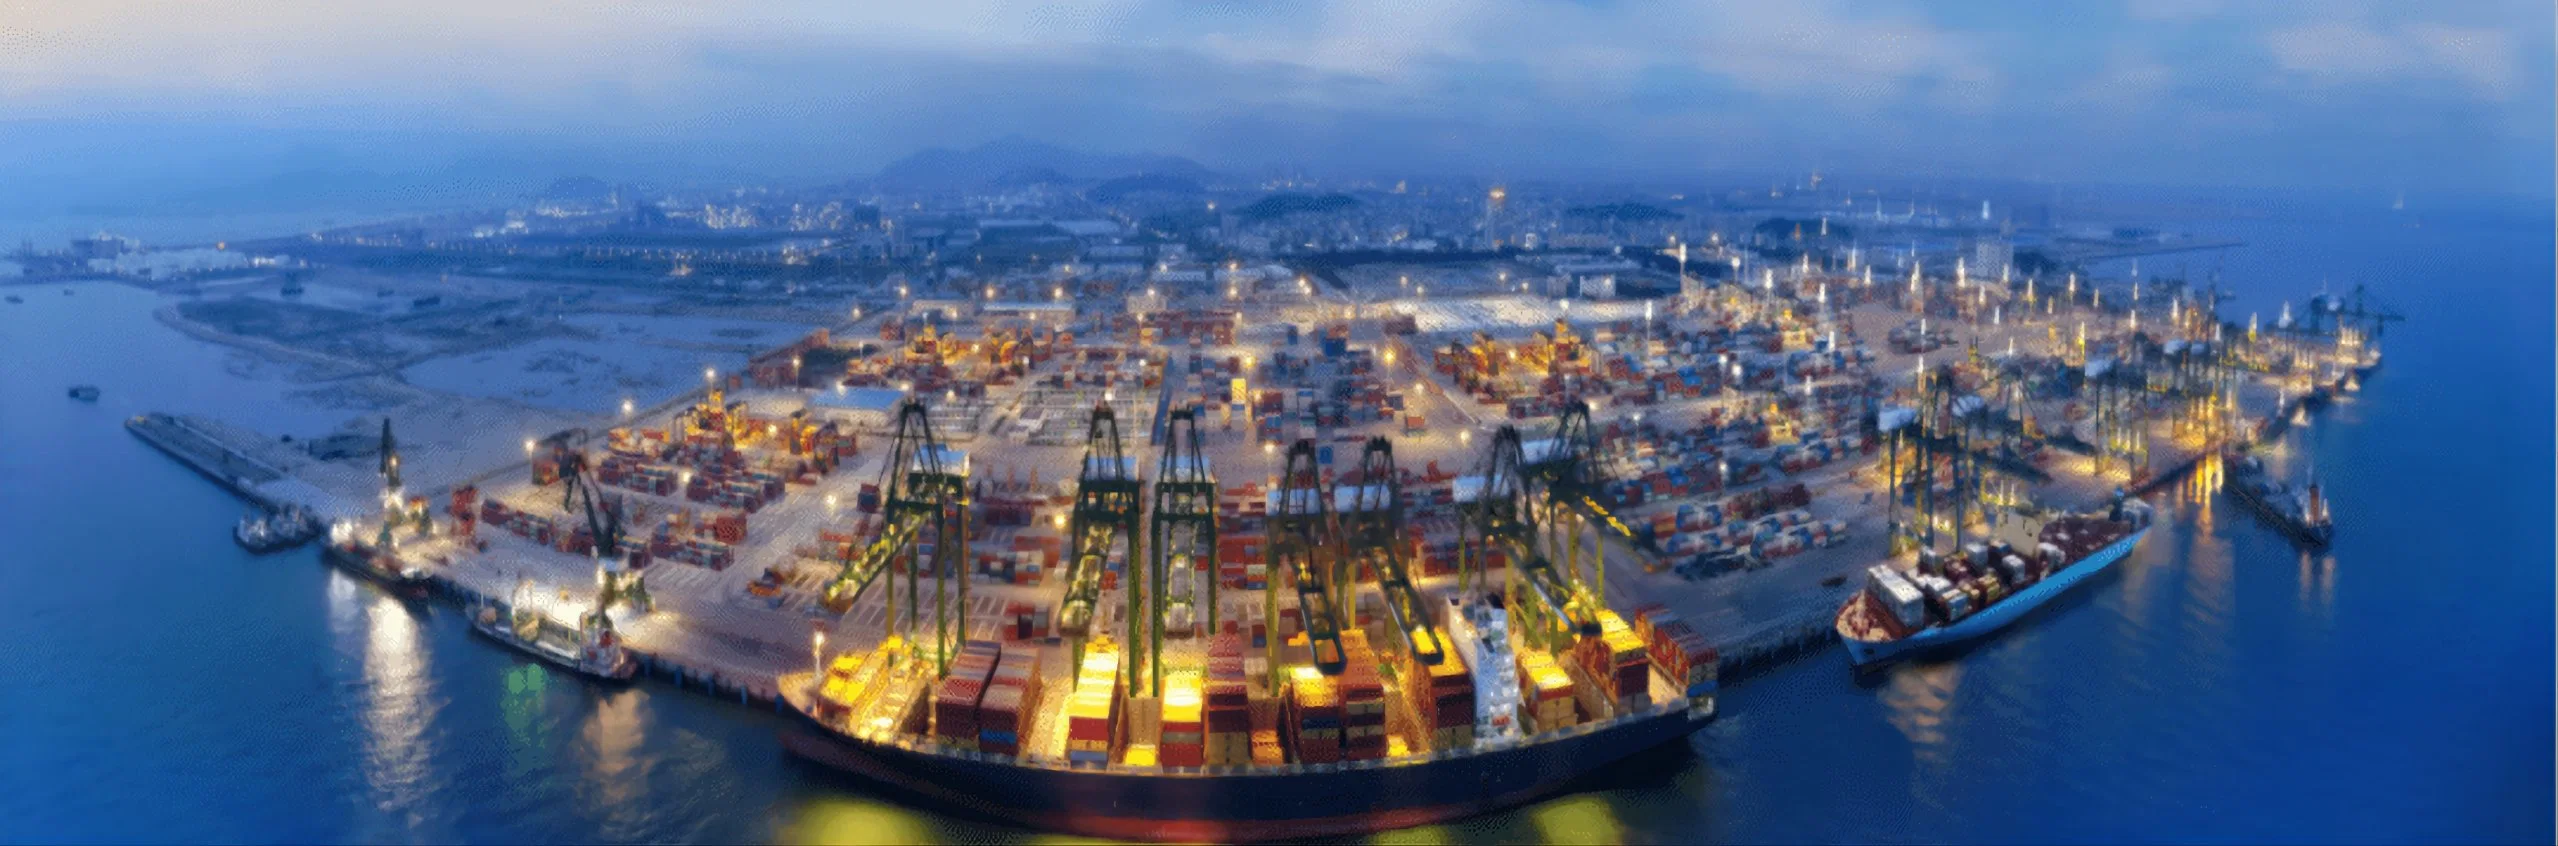 Erfahrene Guangzhou Warehouse Transport nach Litauen UK Deutschland, LKW Express Lieferung Versand Agent Air Cargo Seefracht Spediteur Logistik-Service